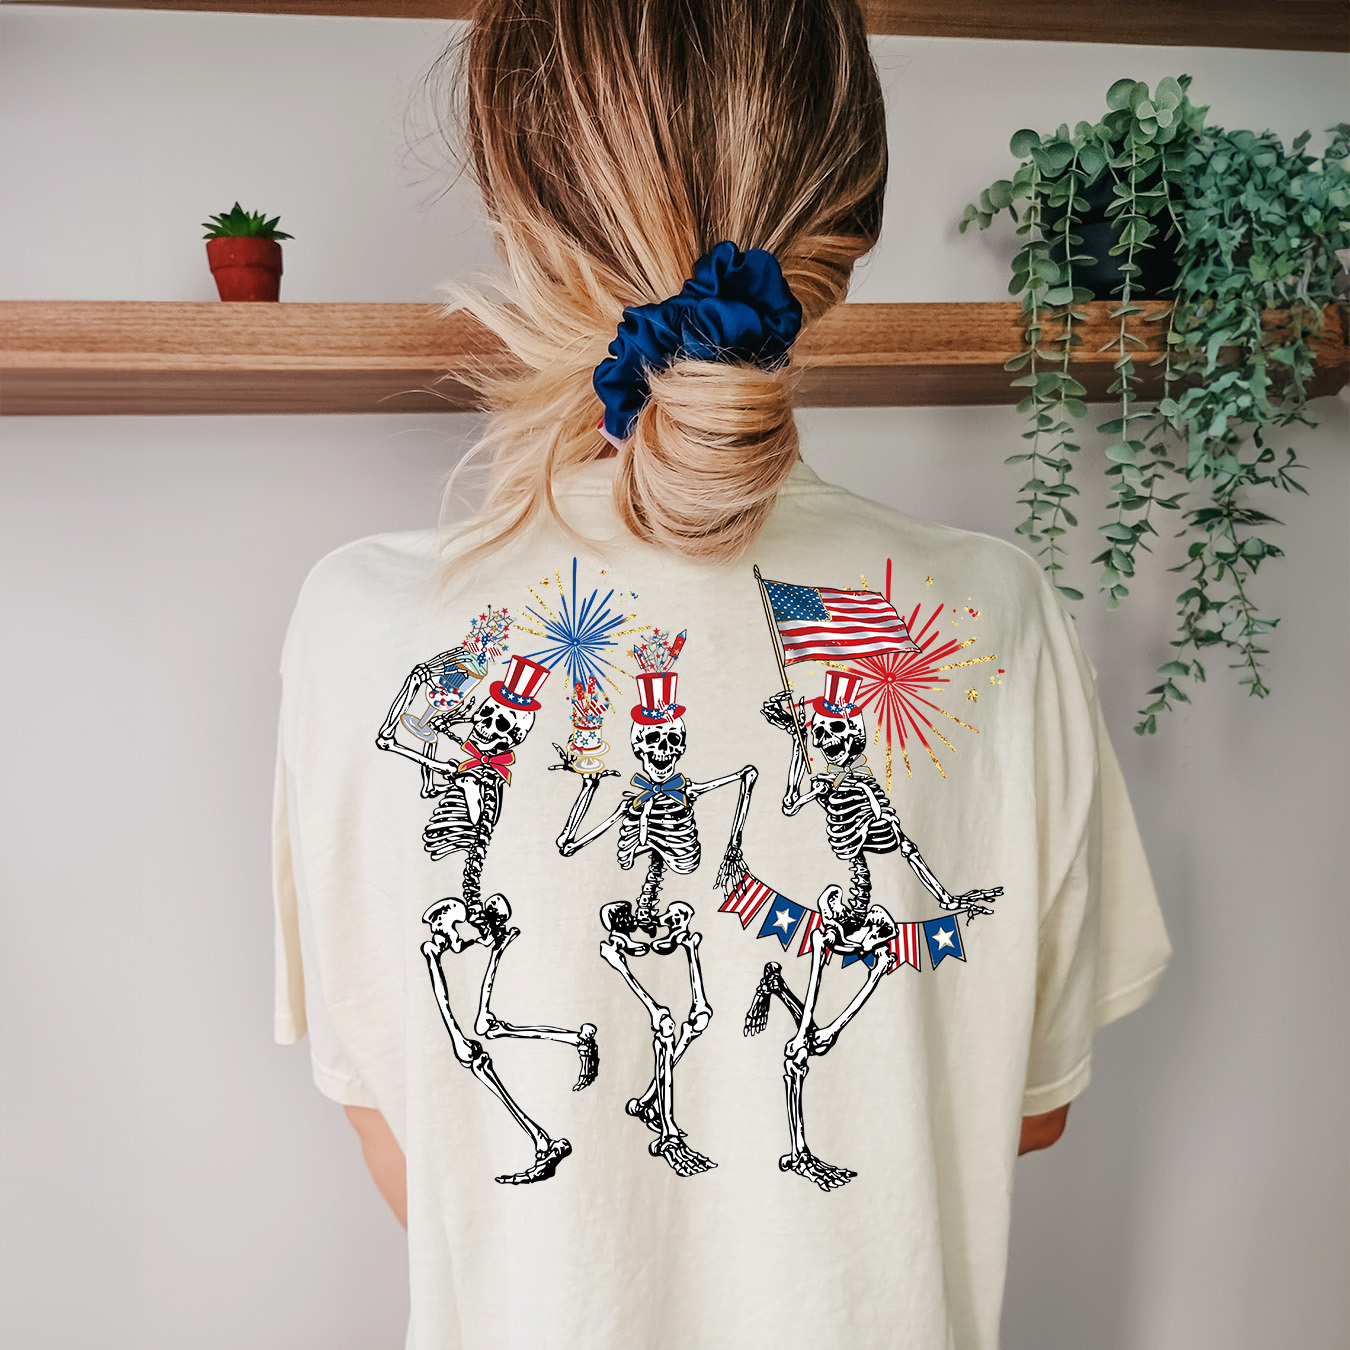 

American Flag & Skull Man Print T-shirt, Short Sleeve Crew Neck Casual Top For Summer & Spring, Women's Clothing